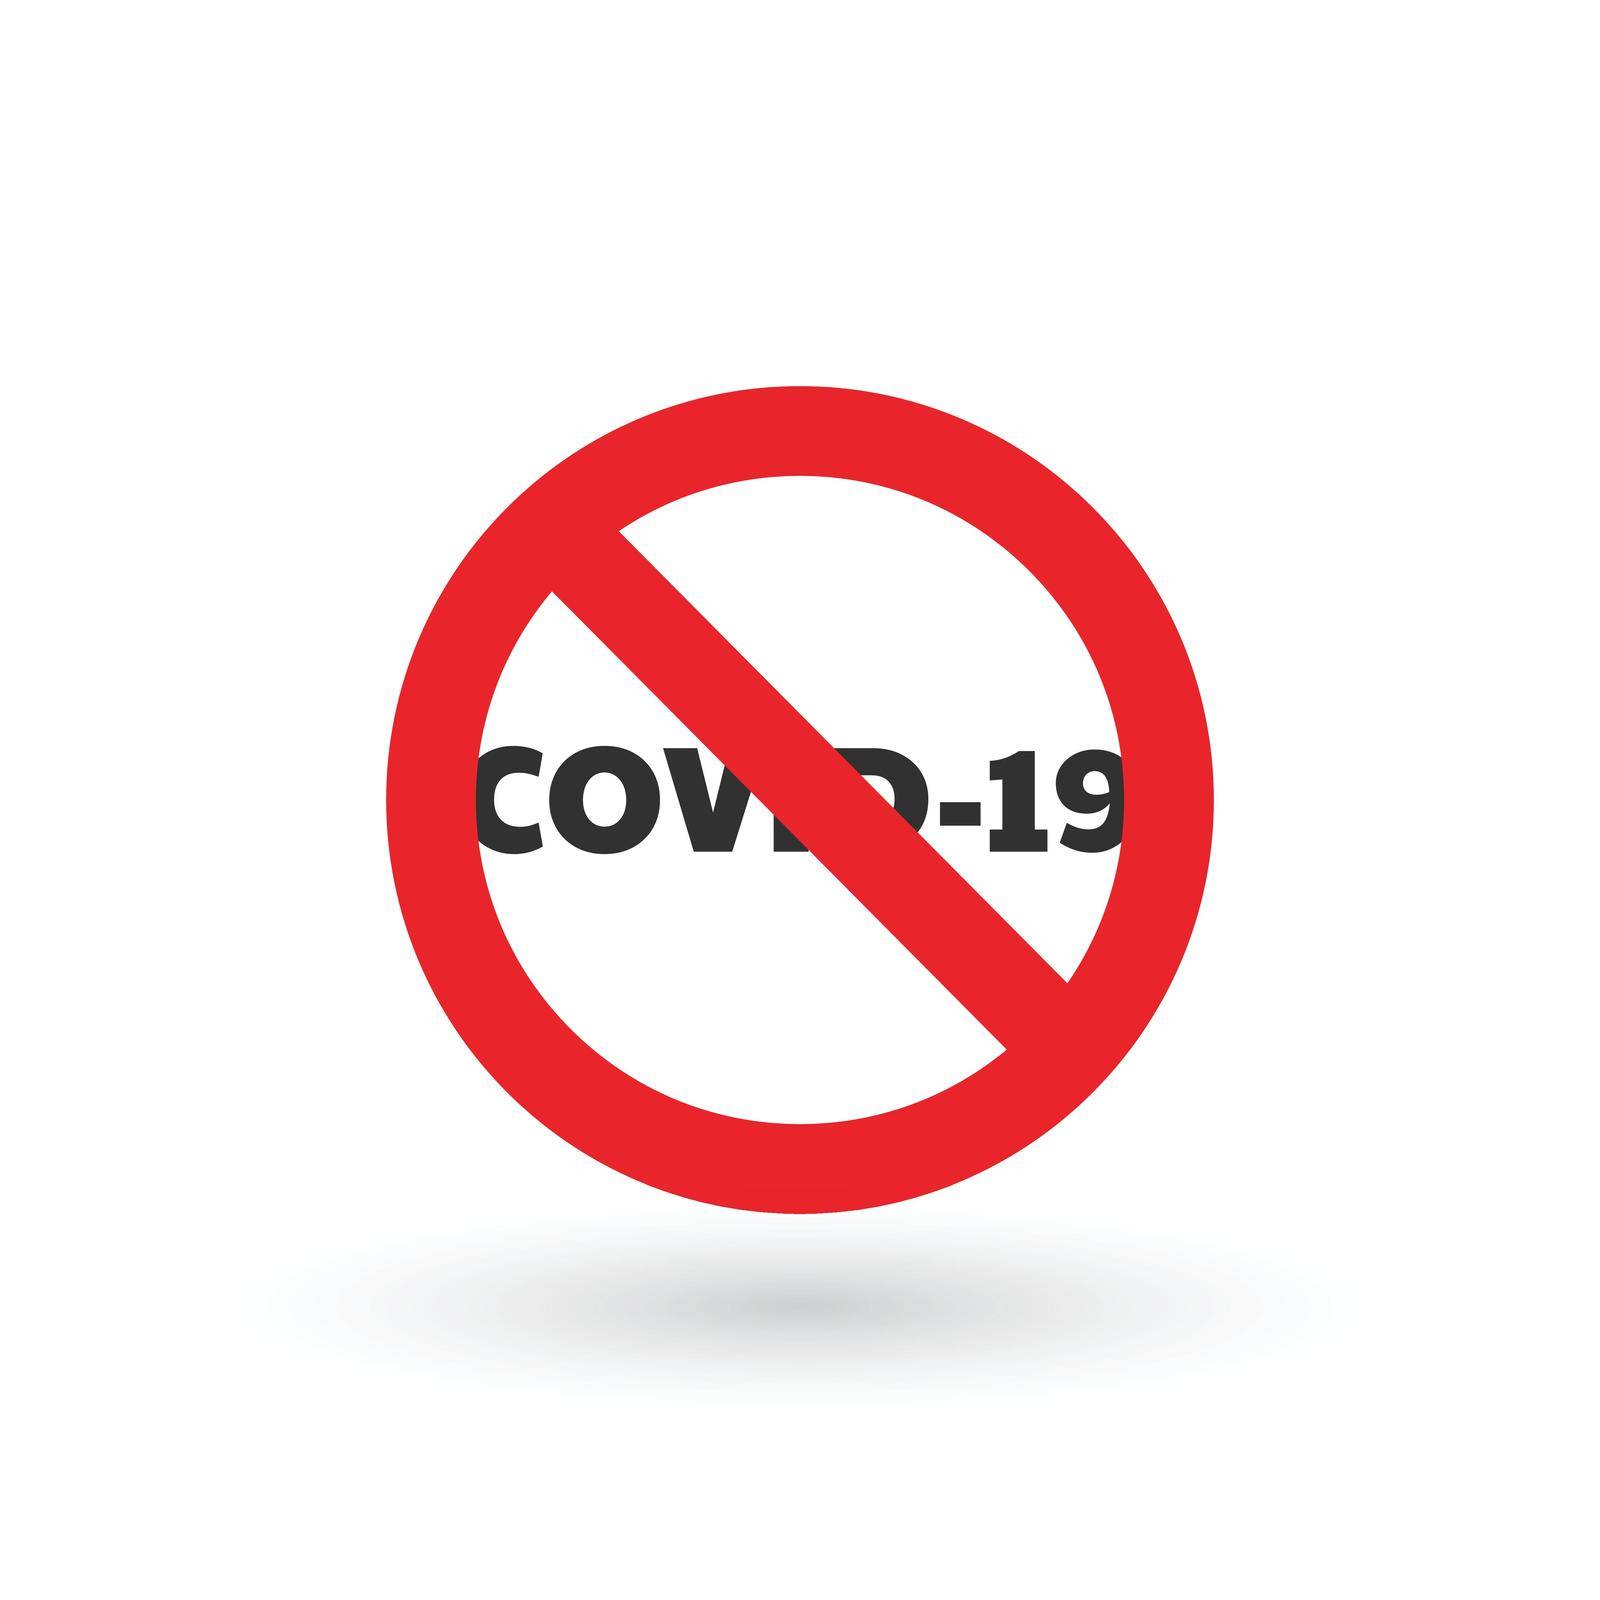 Stop coronavirus COVID-19. Dangerous chinese nCoV coronavirus outbreak. Pandemic medical concept with dangerous cells. by Kyrylov